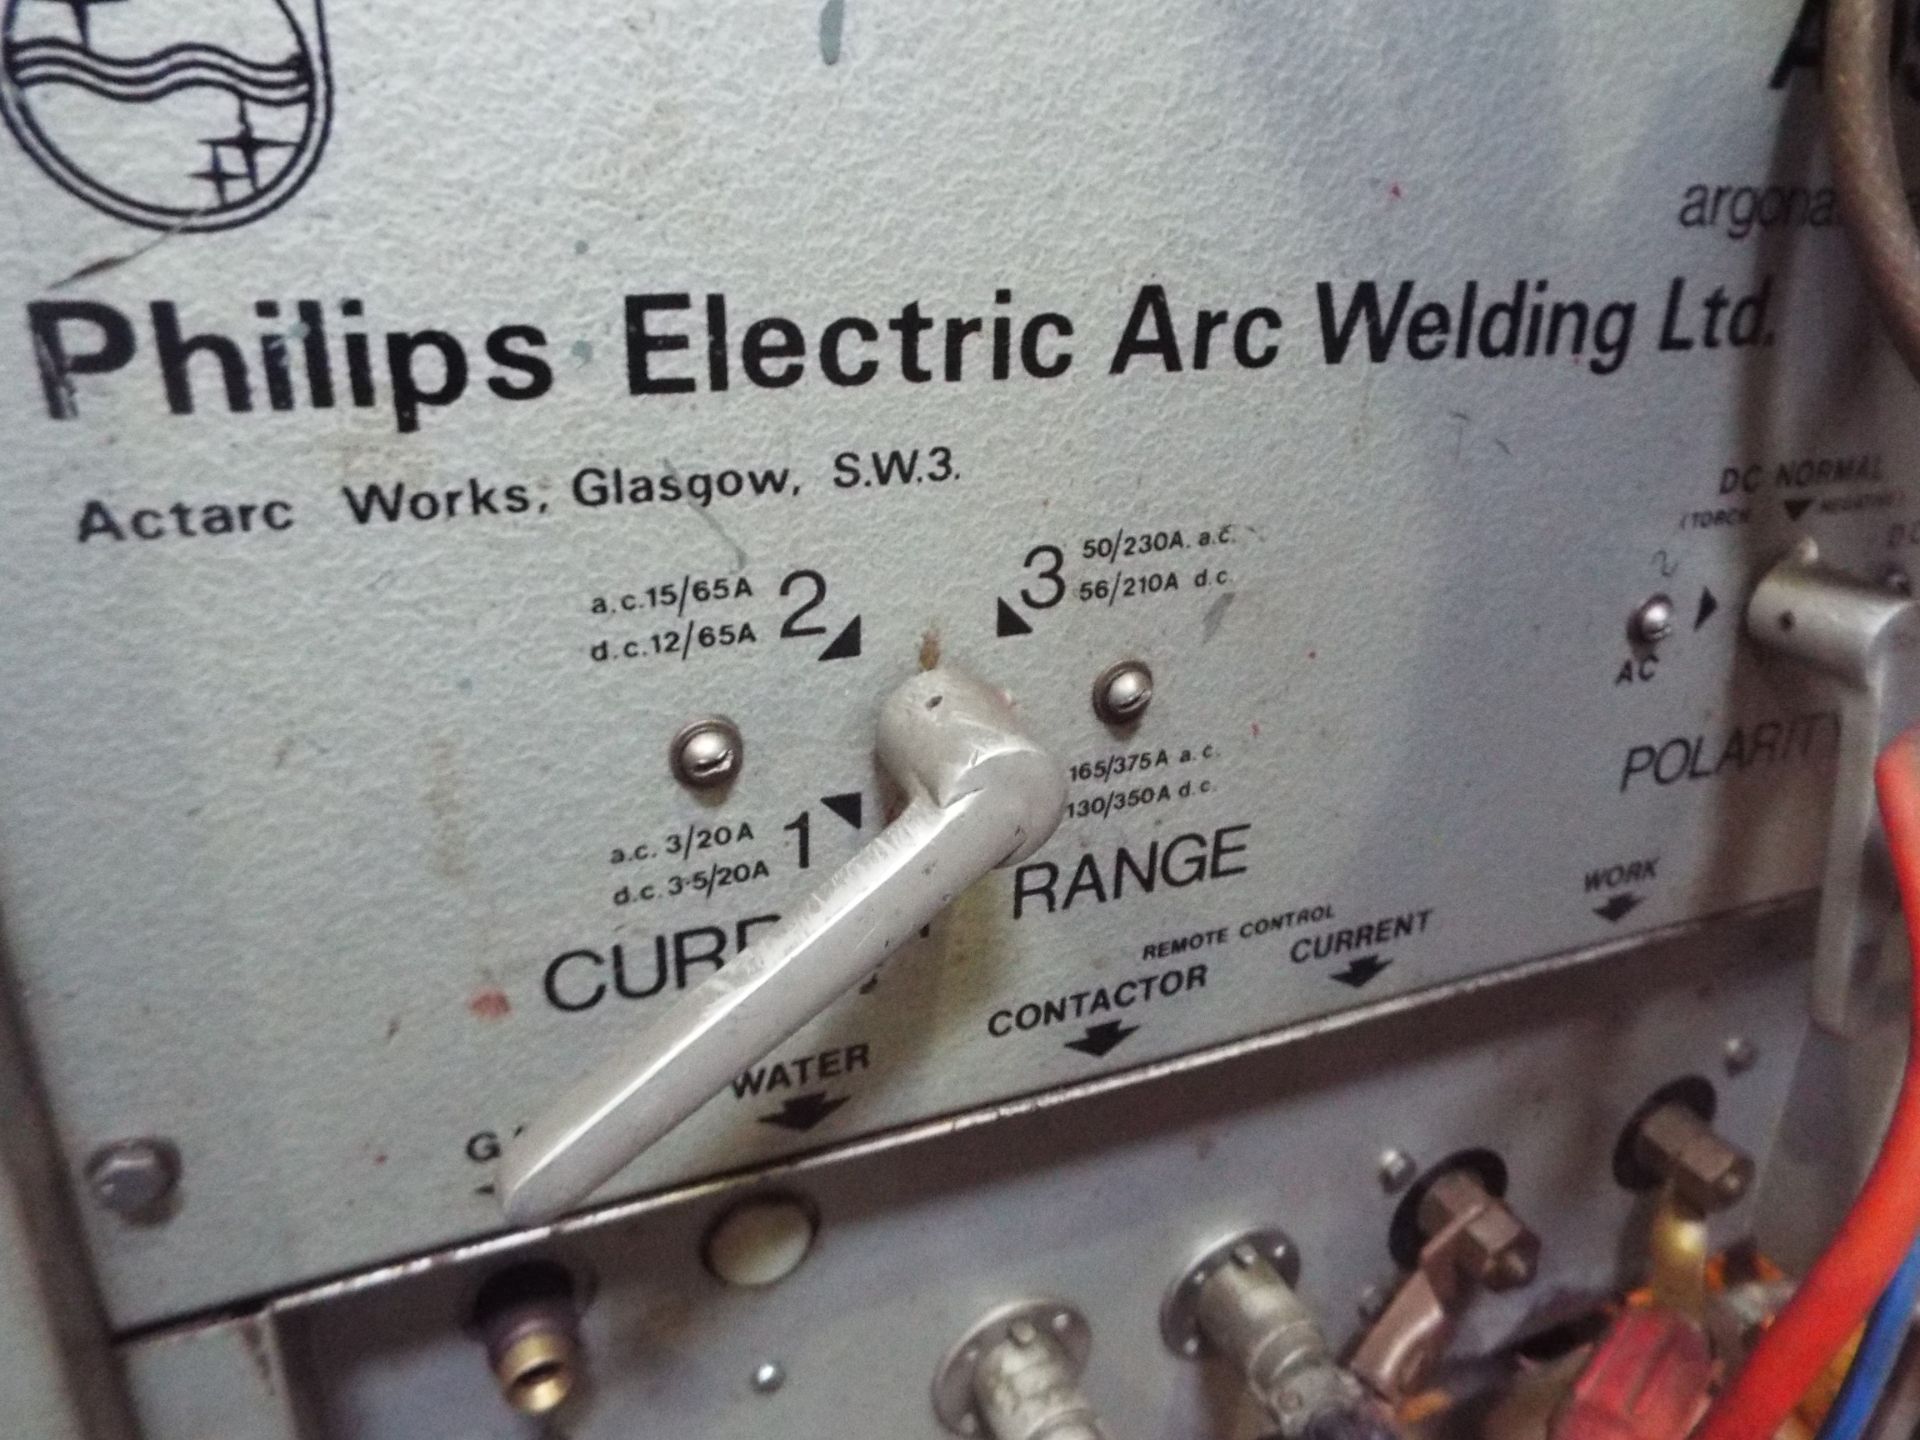 Philips ADS300 Argonarc AC/DC Welding Unit. - Image 3 of 8